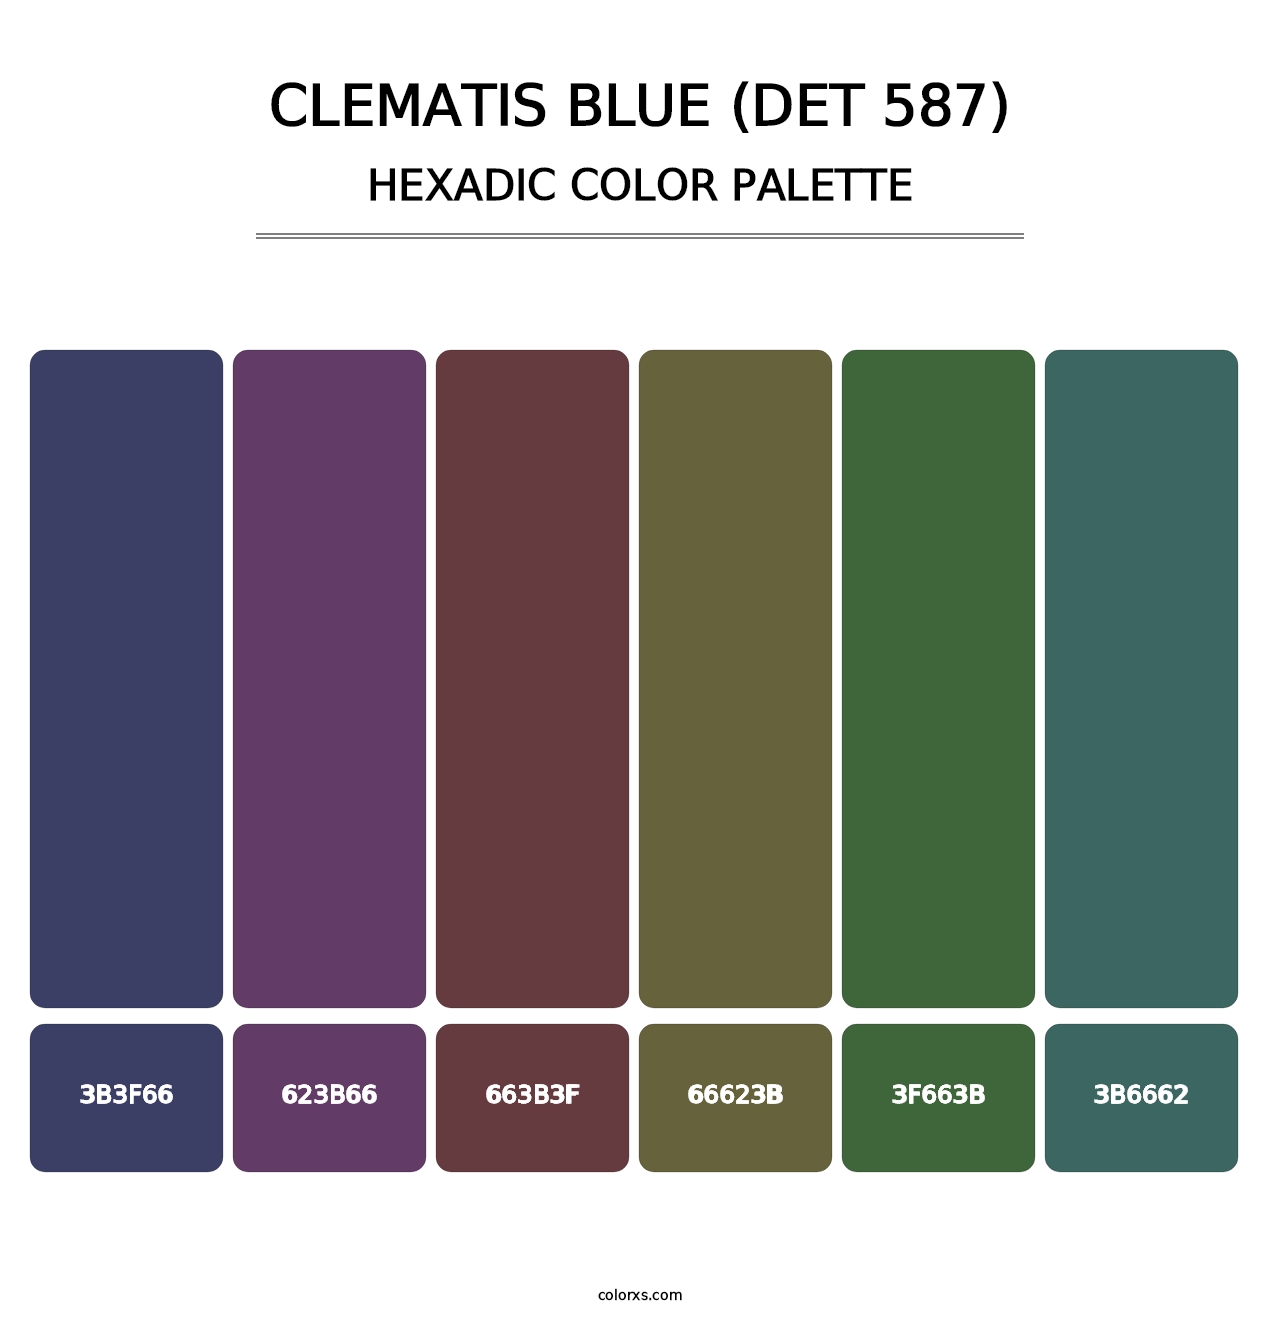 Clematis Blue (DET 587) - Hexadic Color Palette